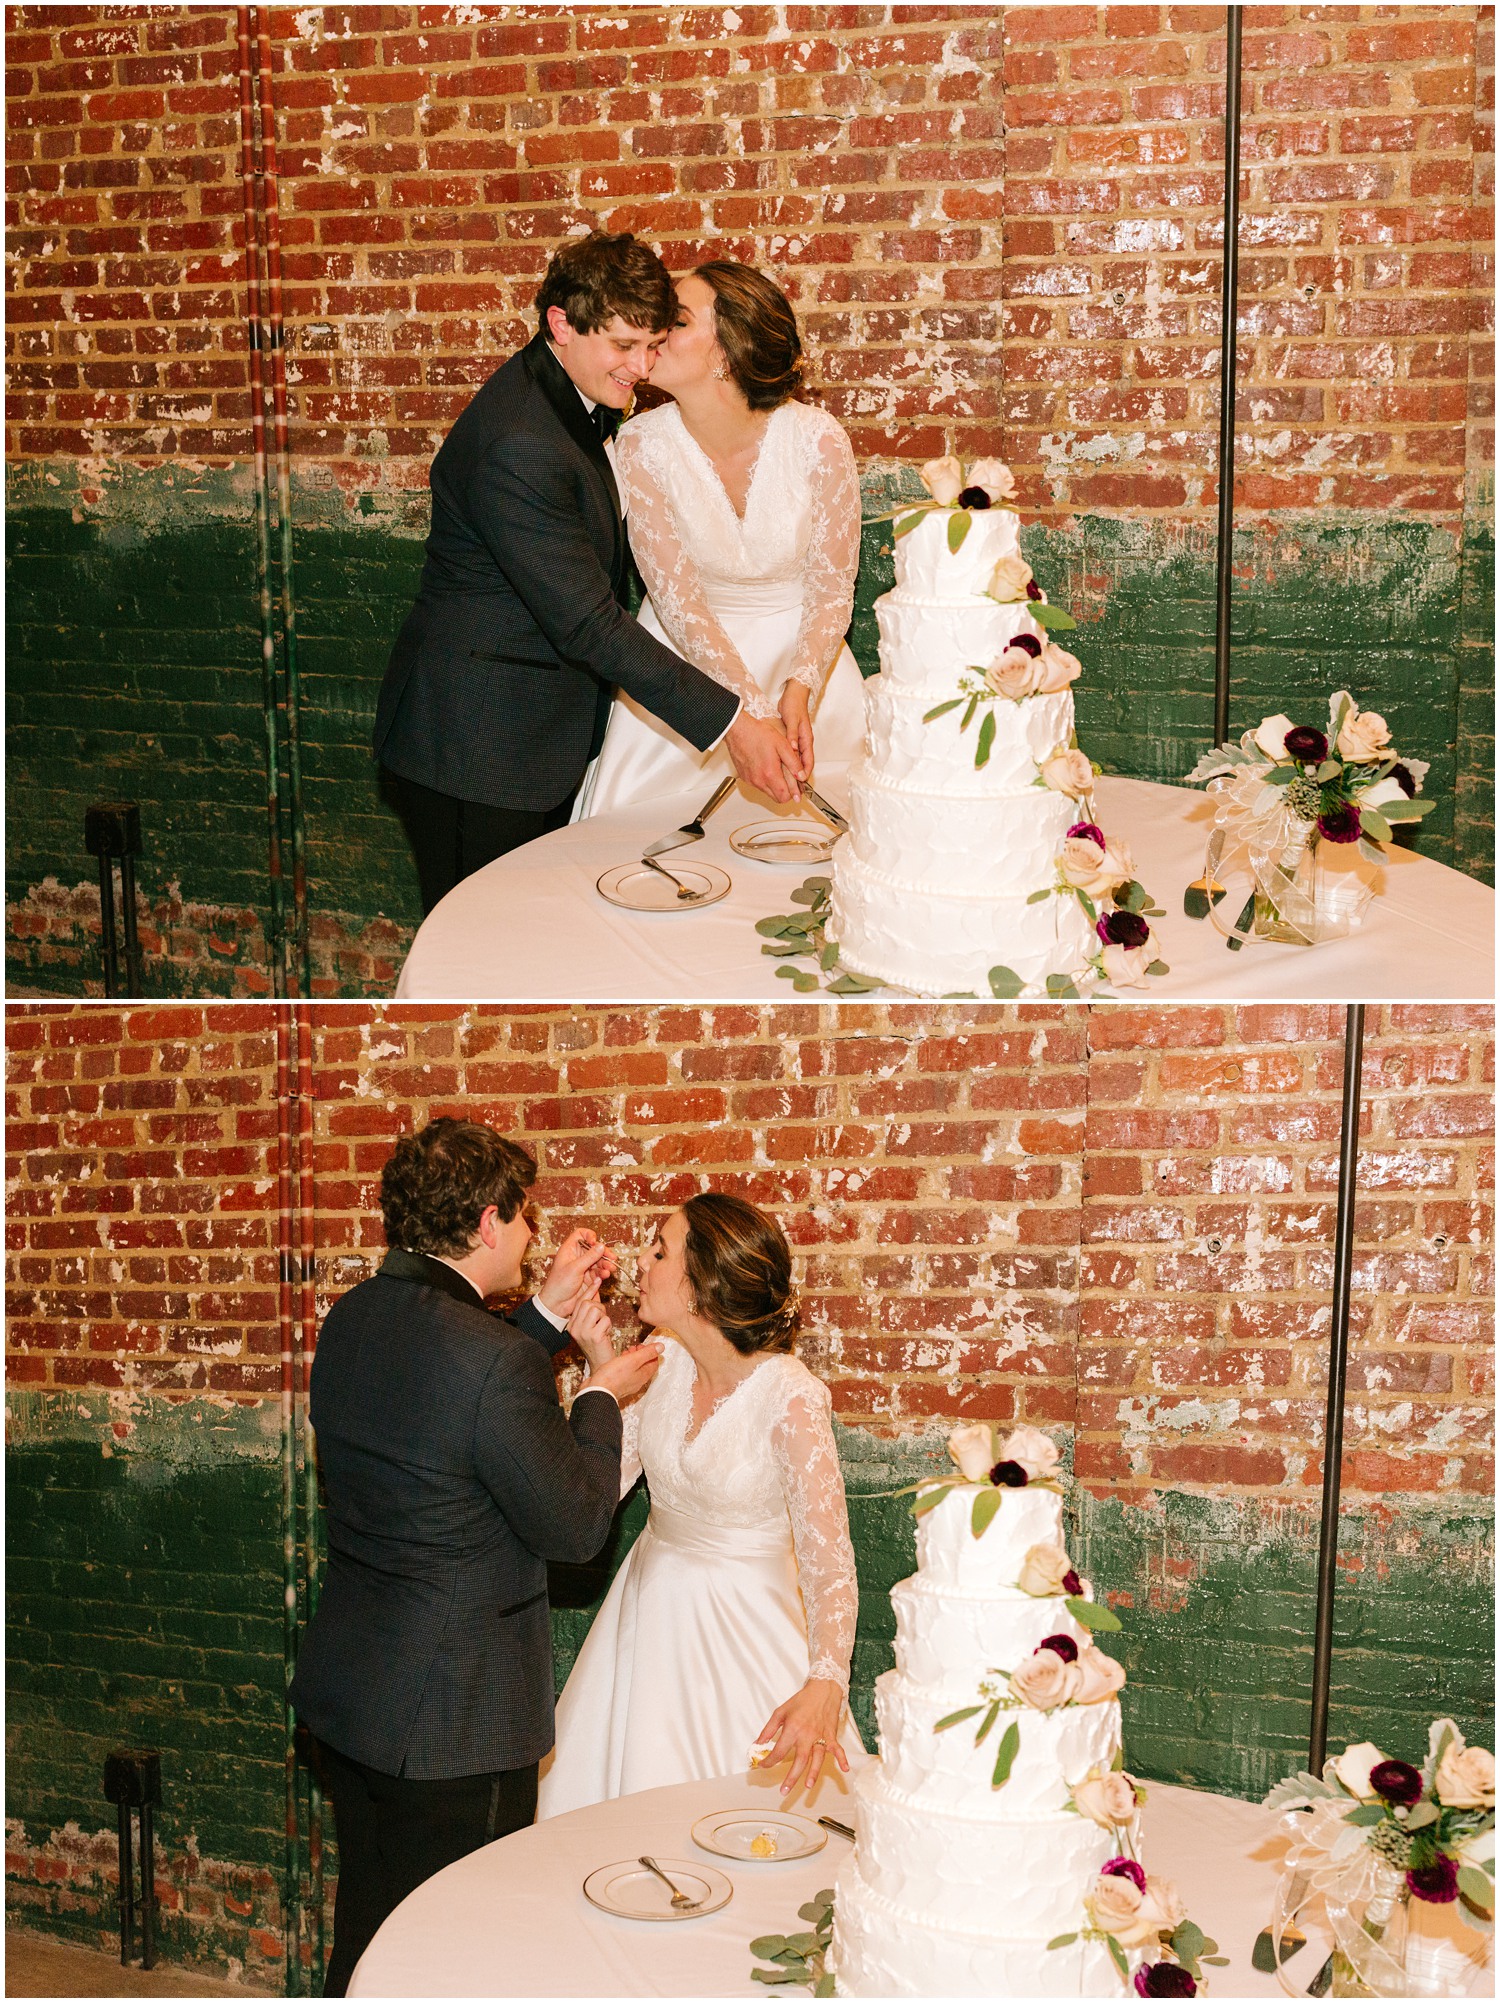 newlyweds cut wedding cake next to brick wall in Cadillac Service Garage in Greensboro NC